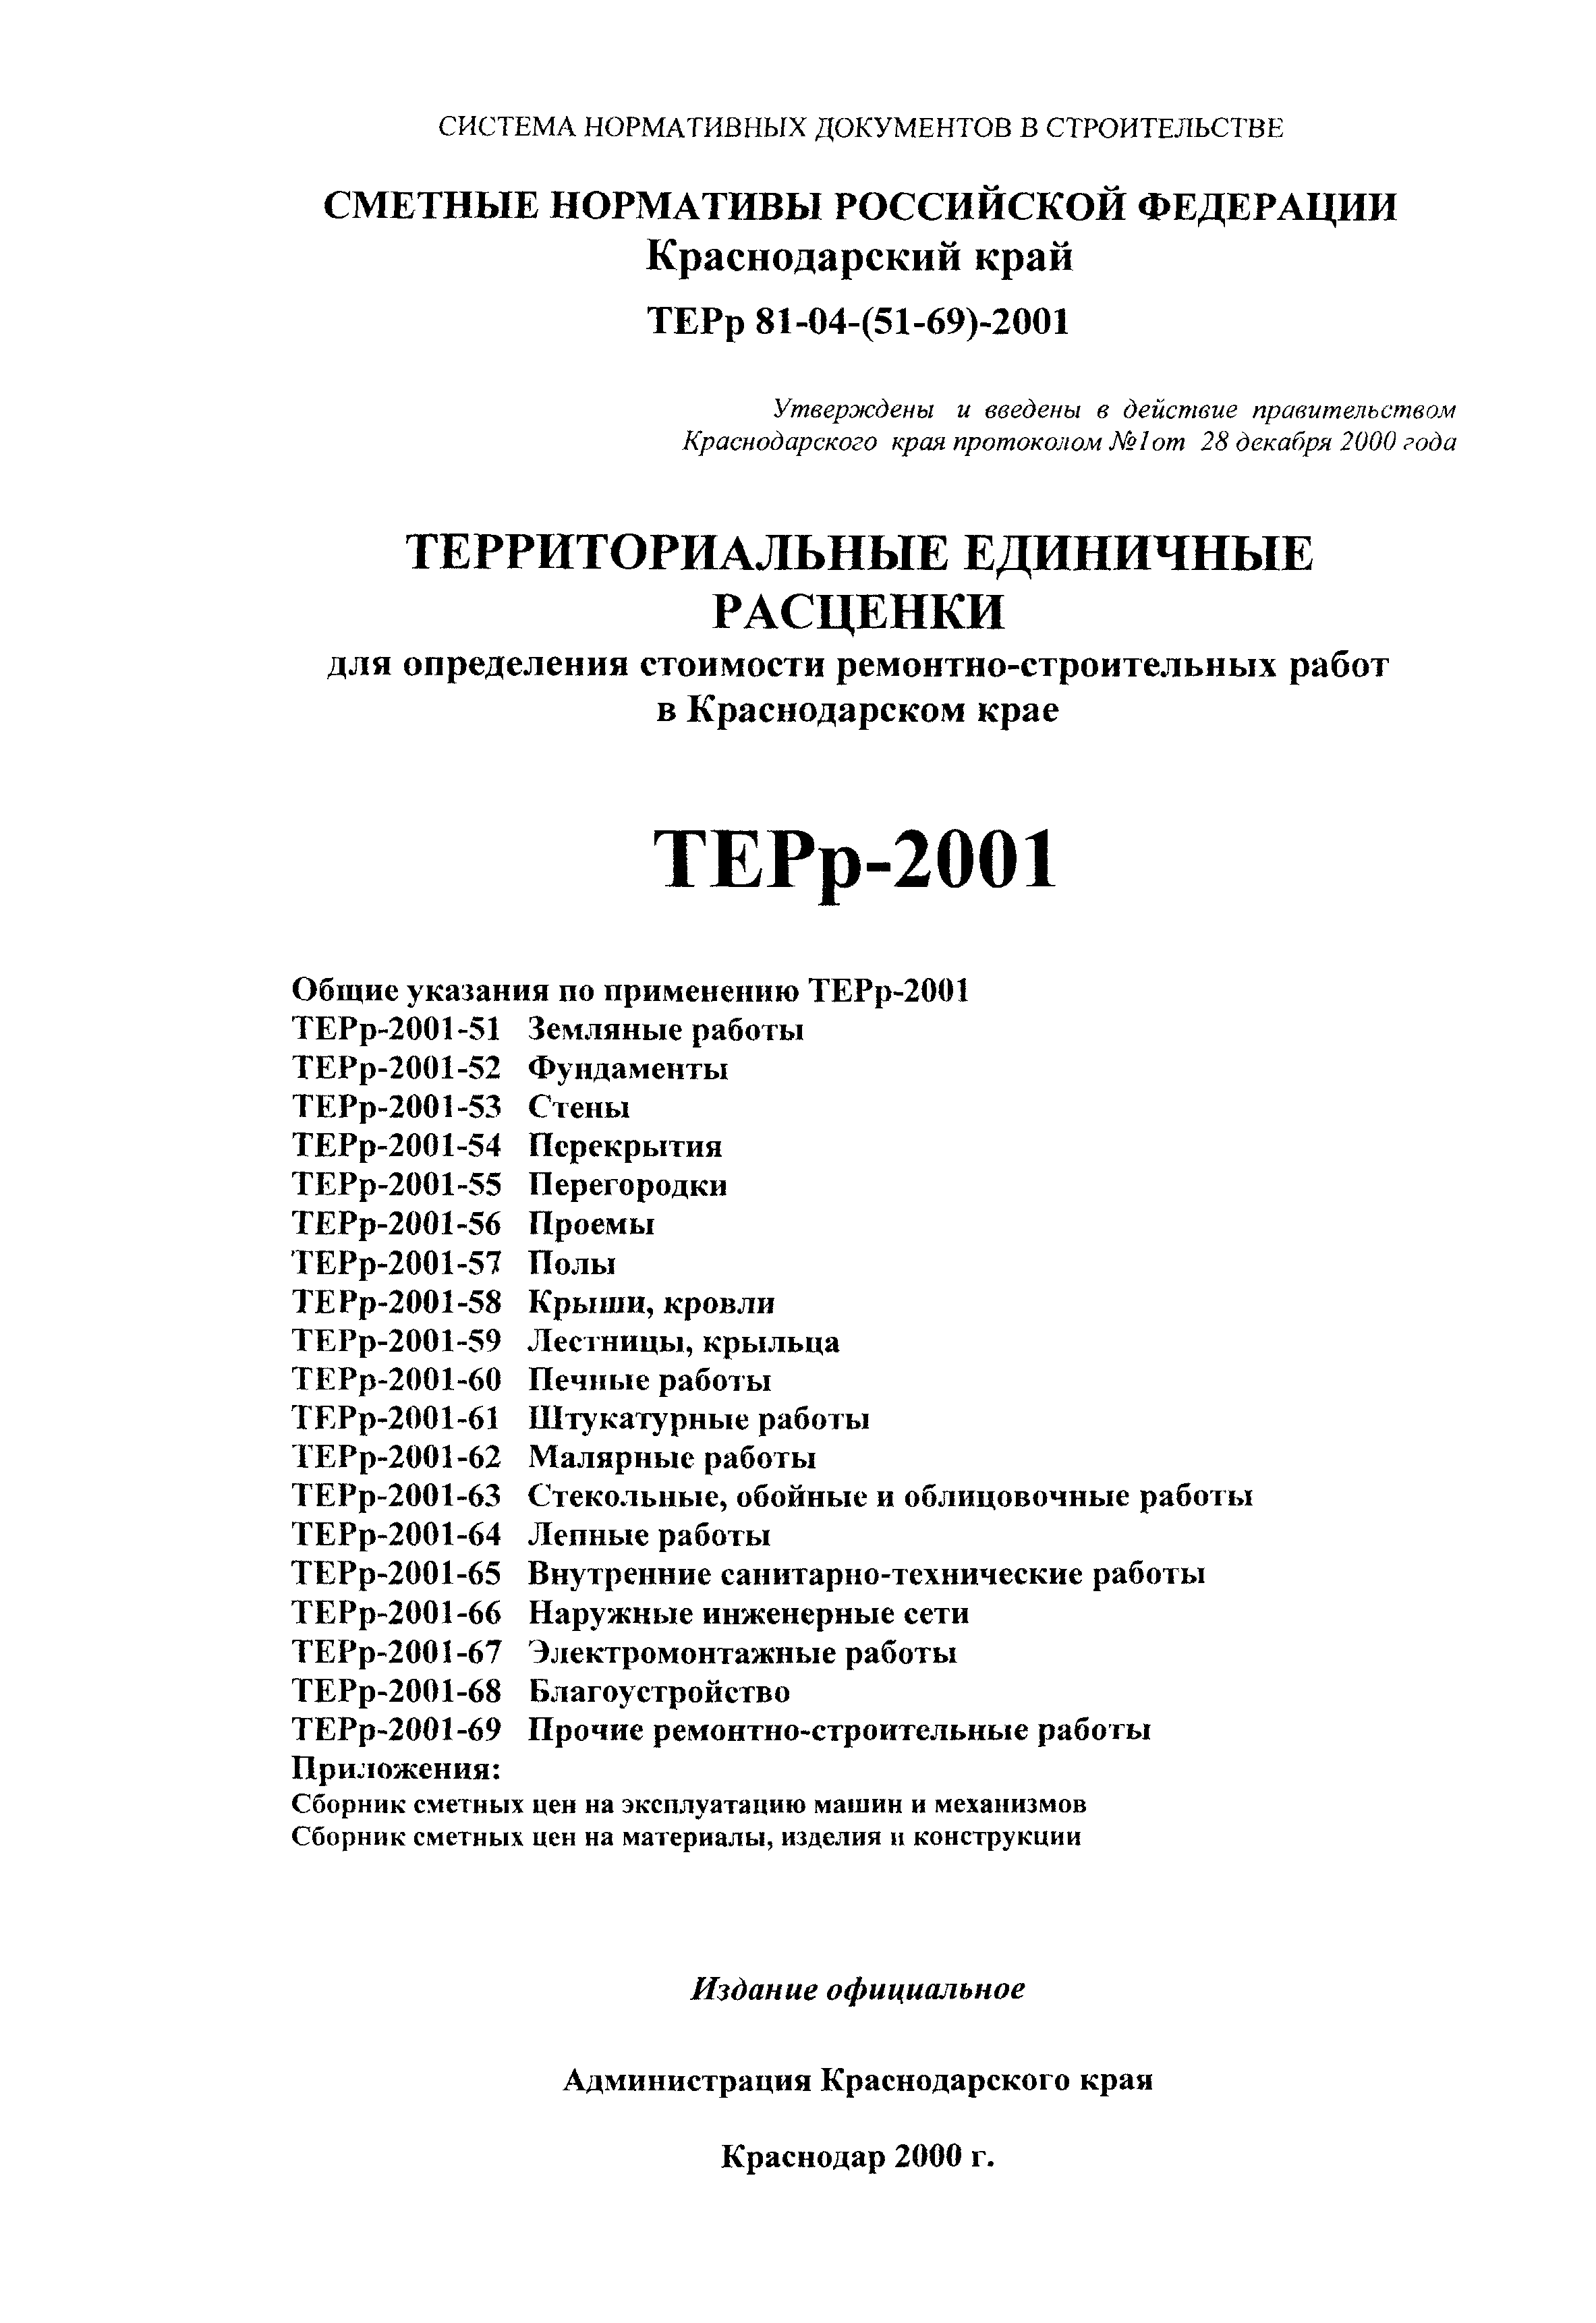 ТЕРр Краснодарский край 2001-59